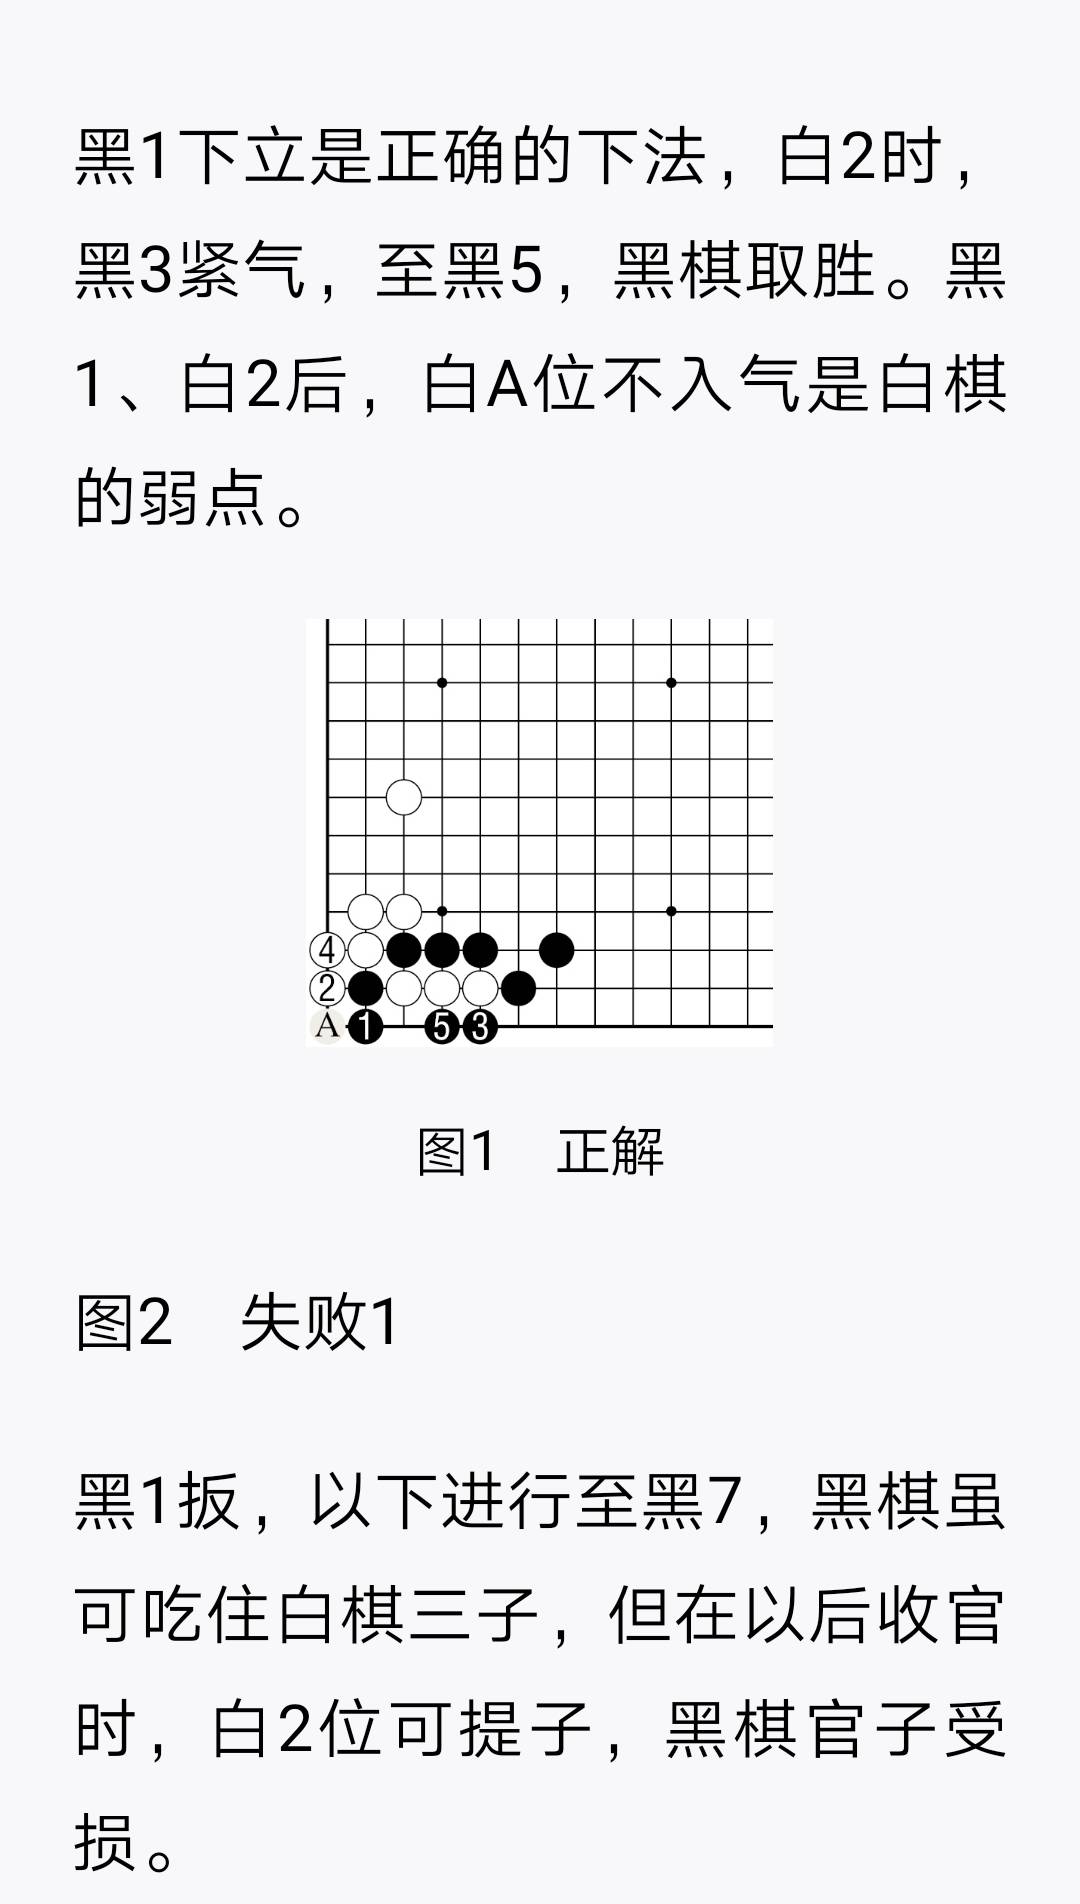 Screenshot_20210327_092912_com.tencent.weread - 副本.jpg